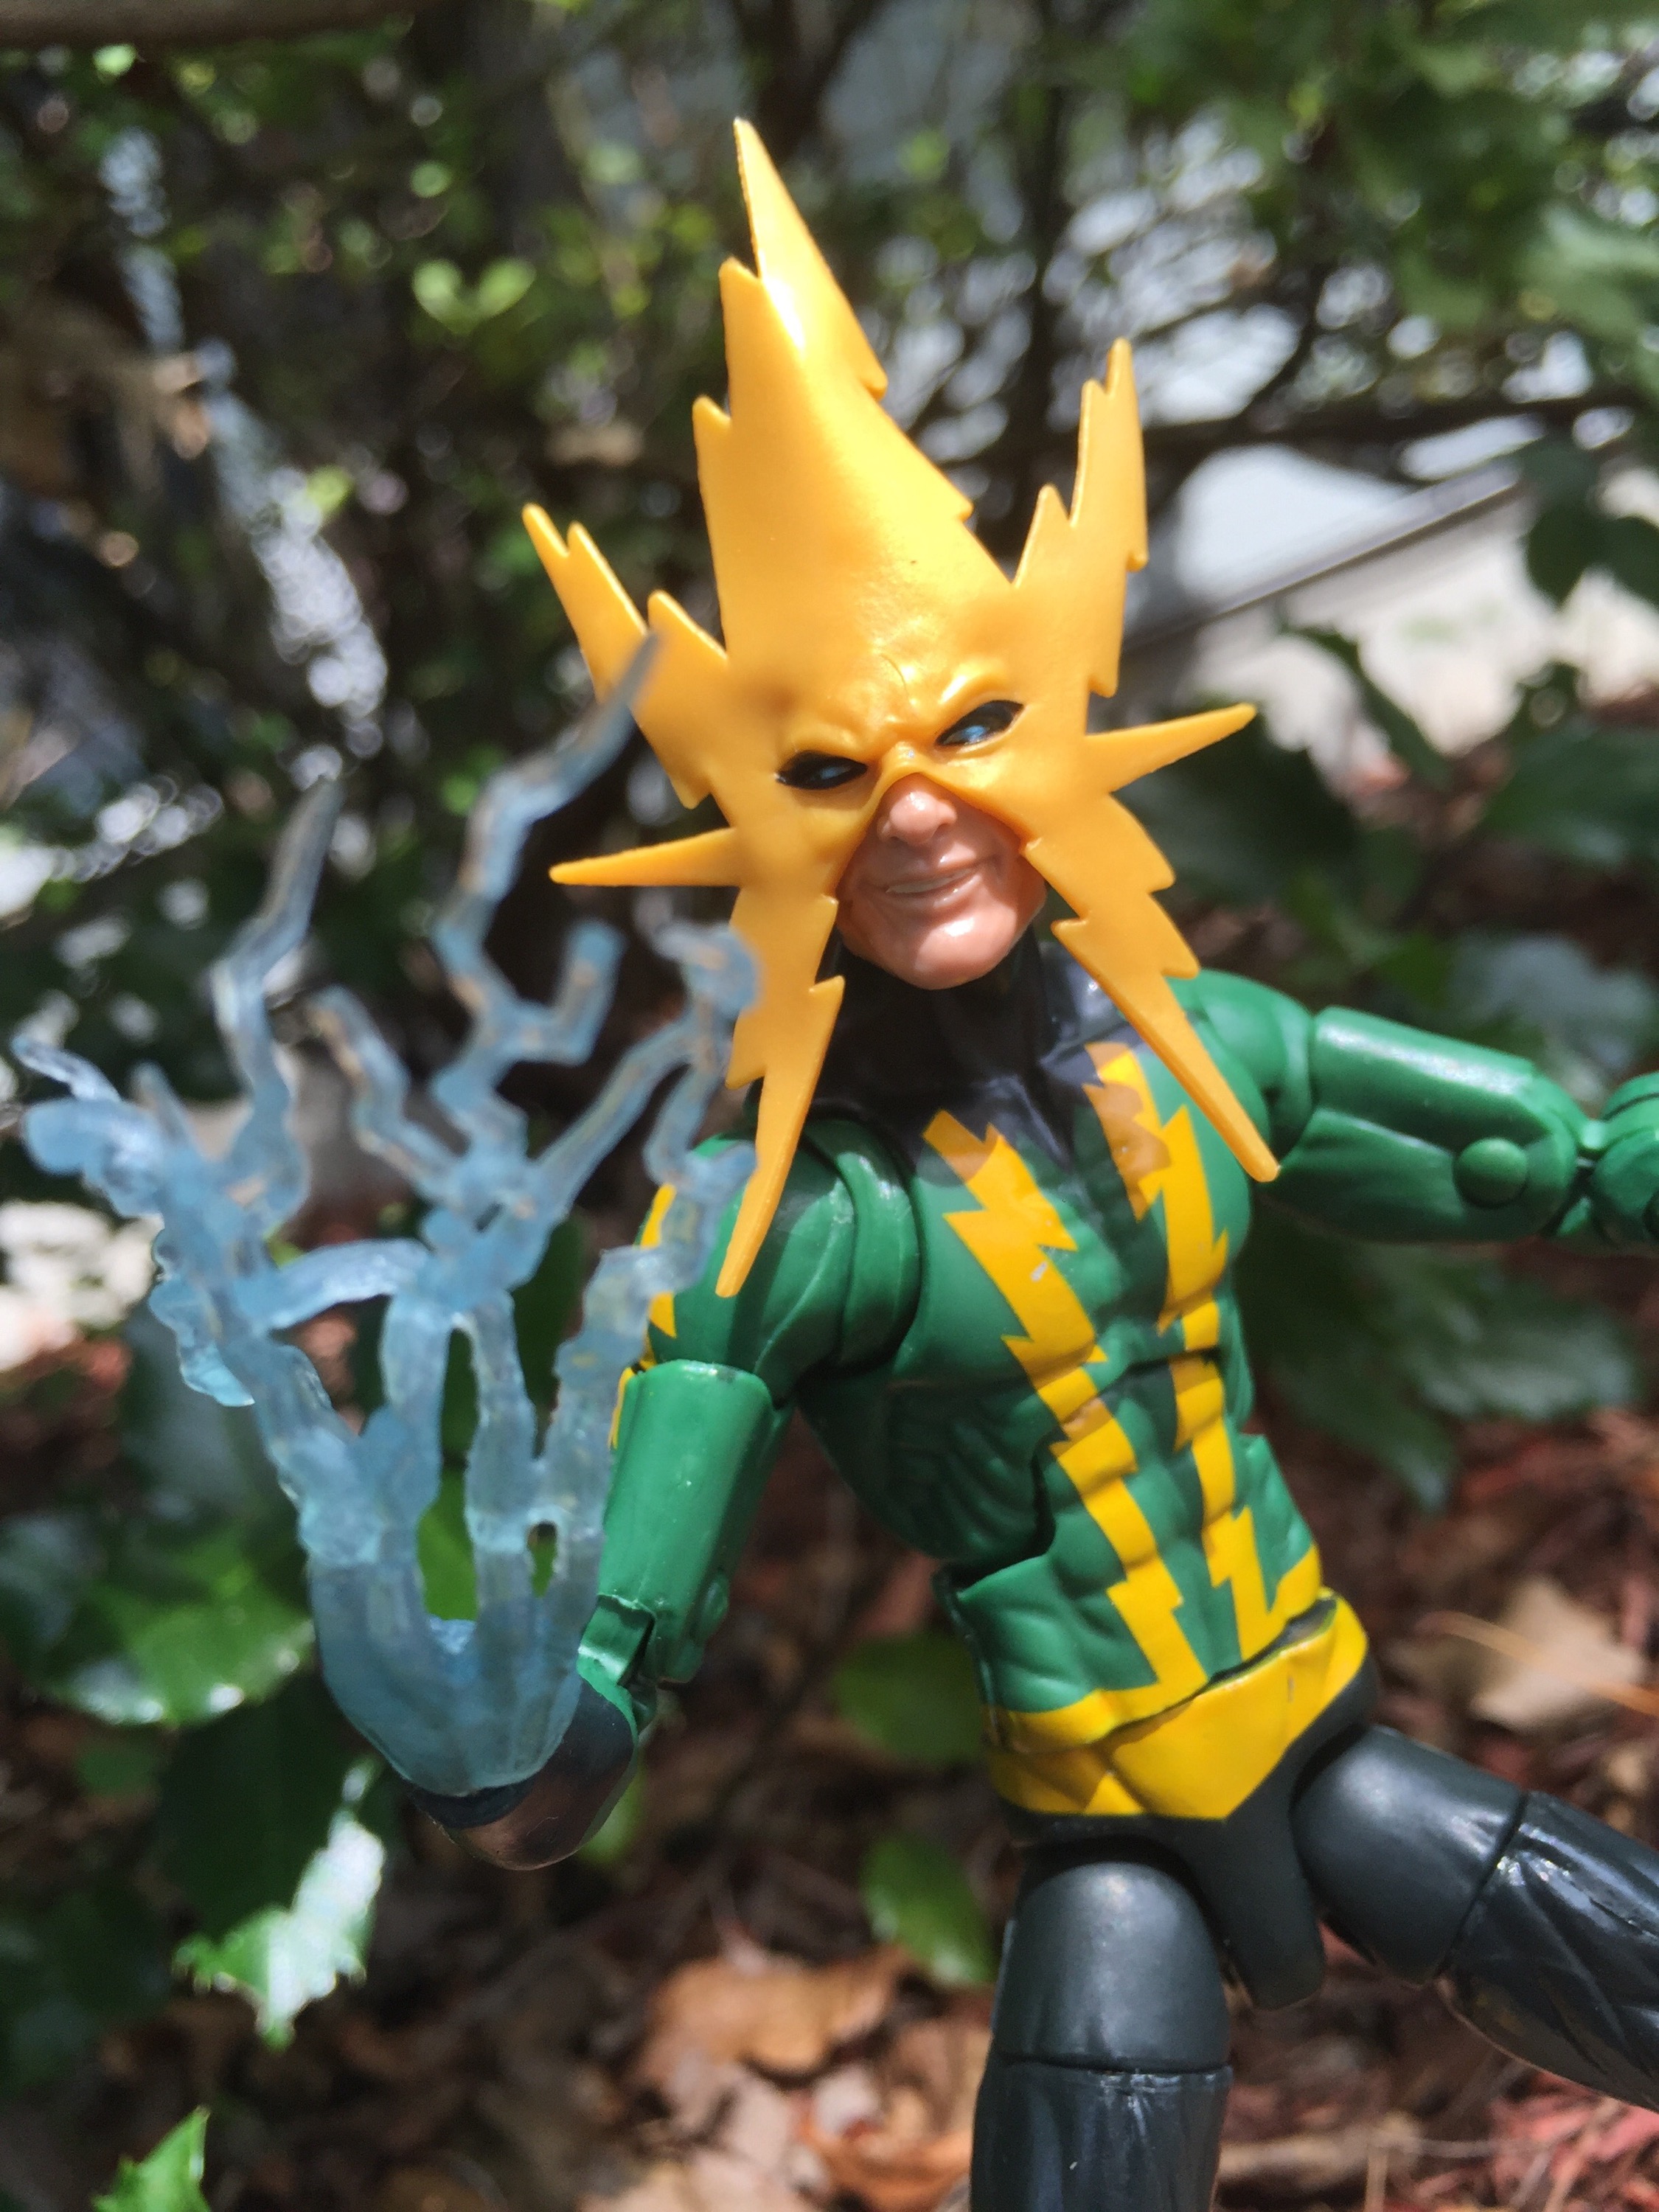 SpiderMan Marvel Legends Electro Review & Photos (2016